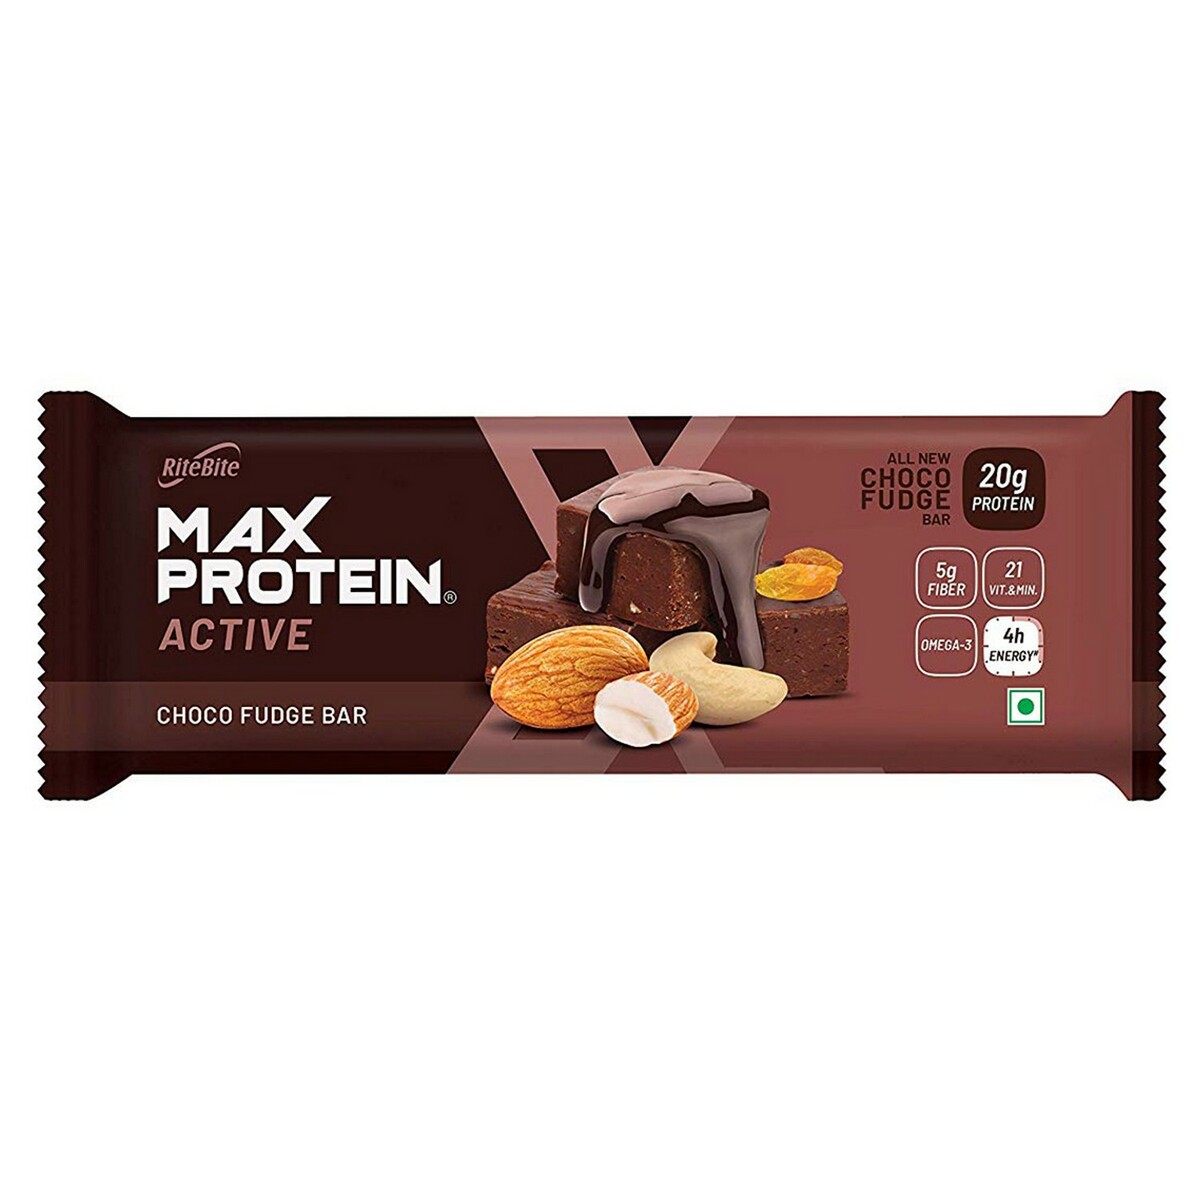 Rite Bite Max Protein Choco Fudge Bar 75g